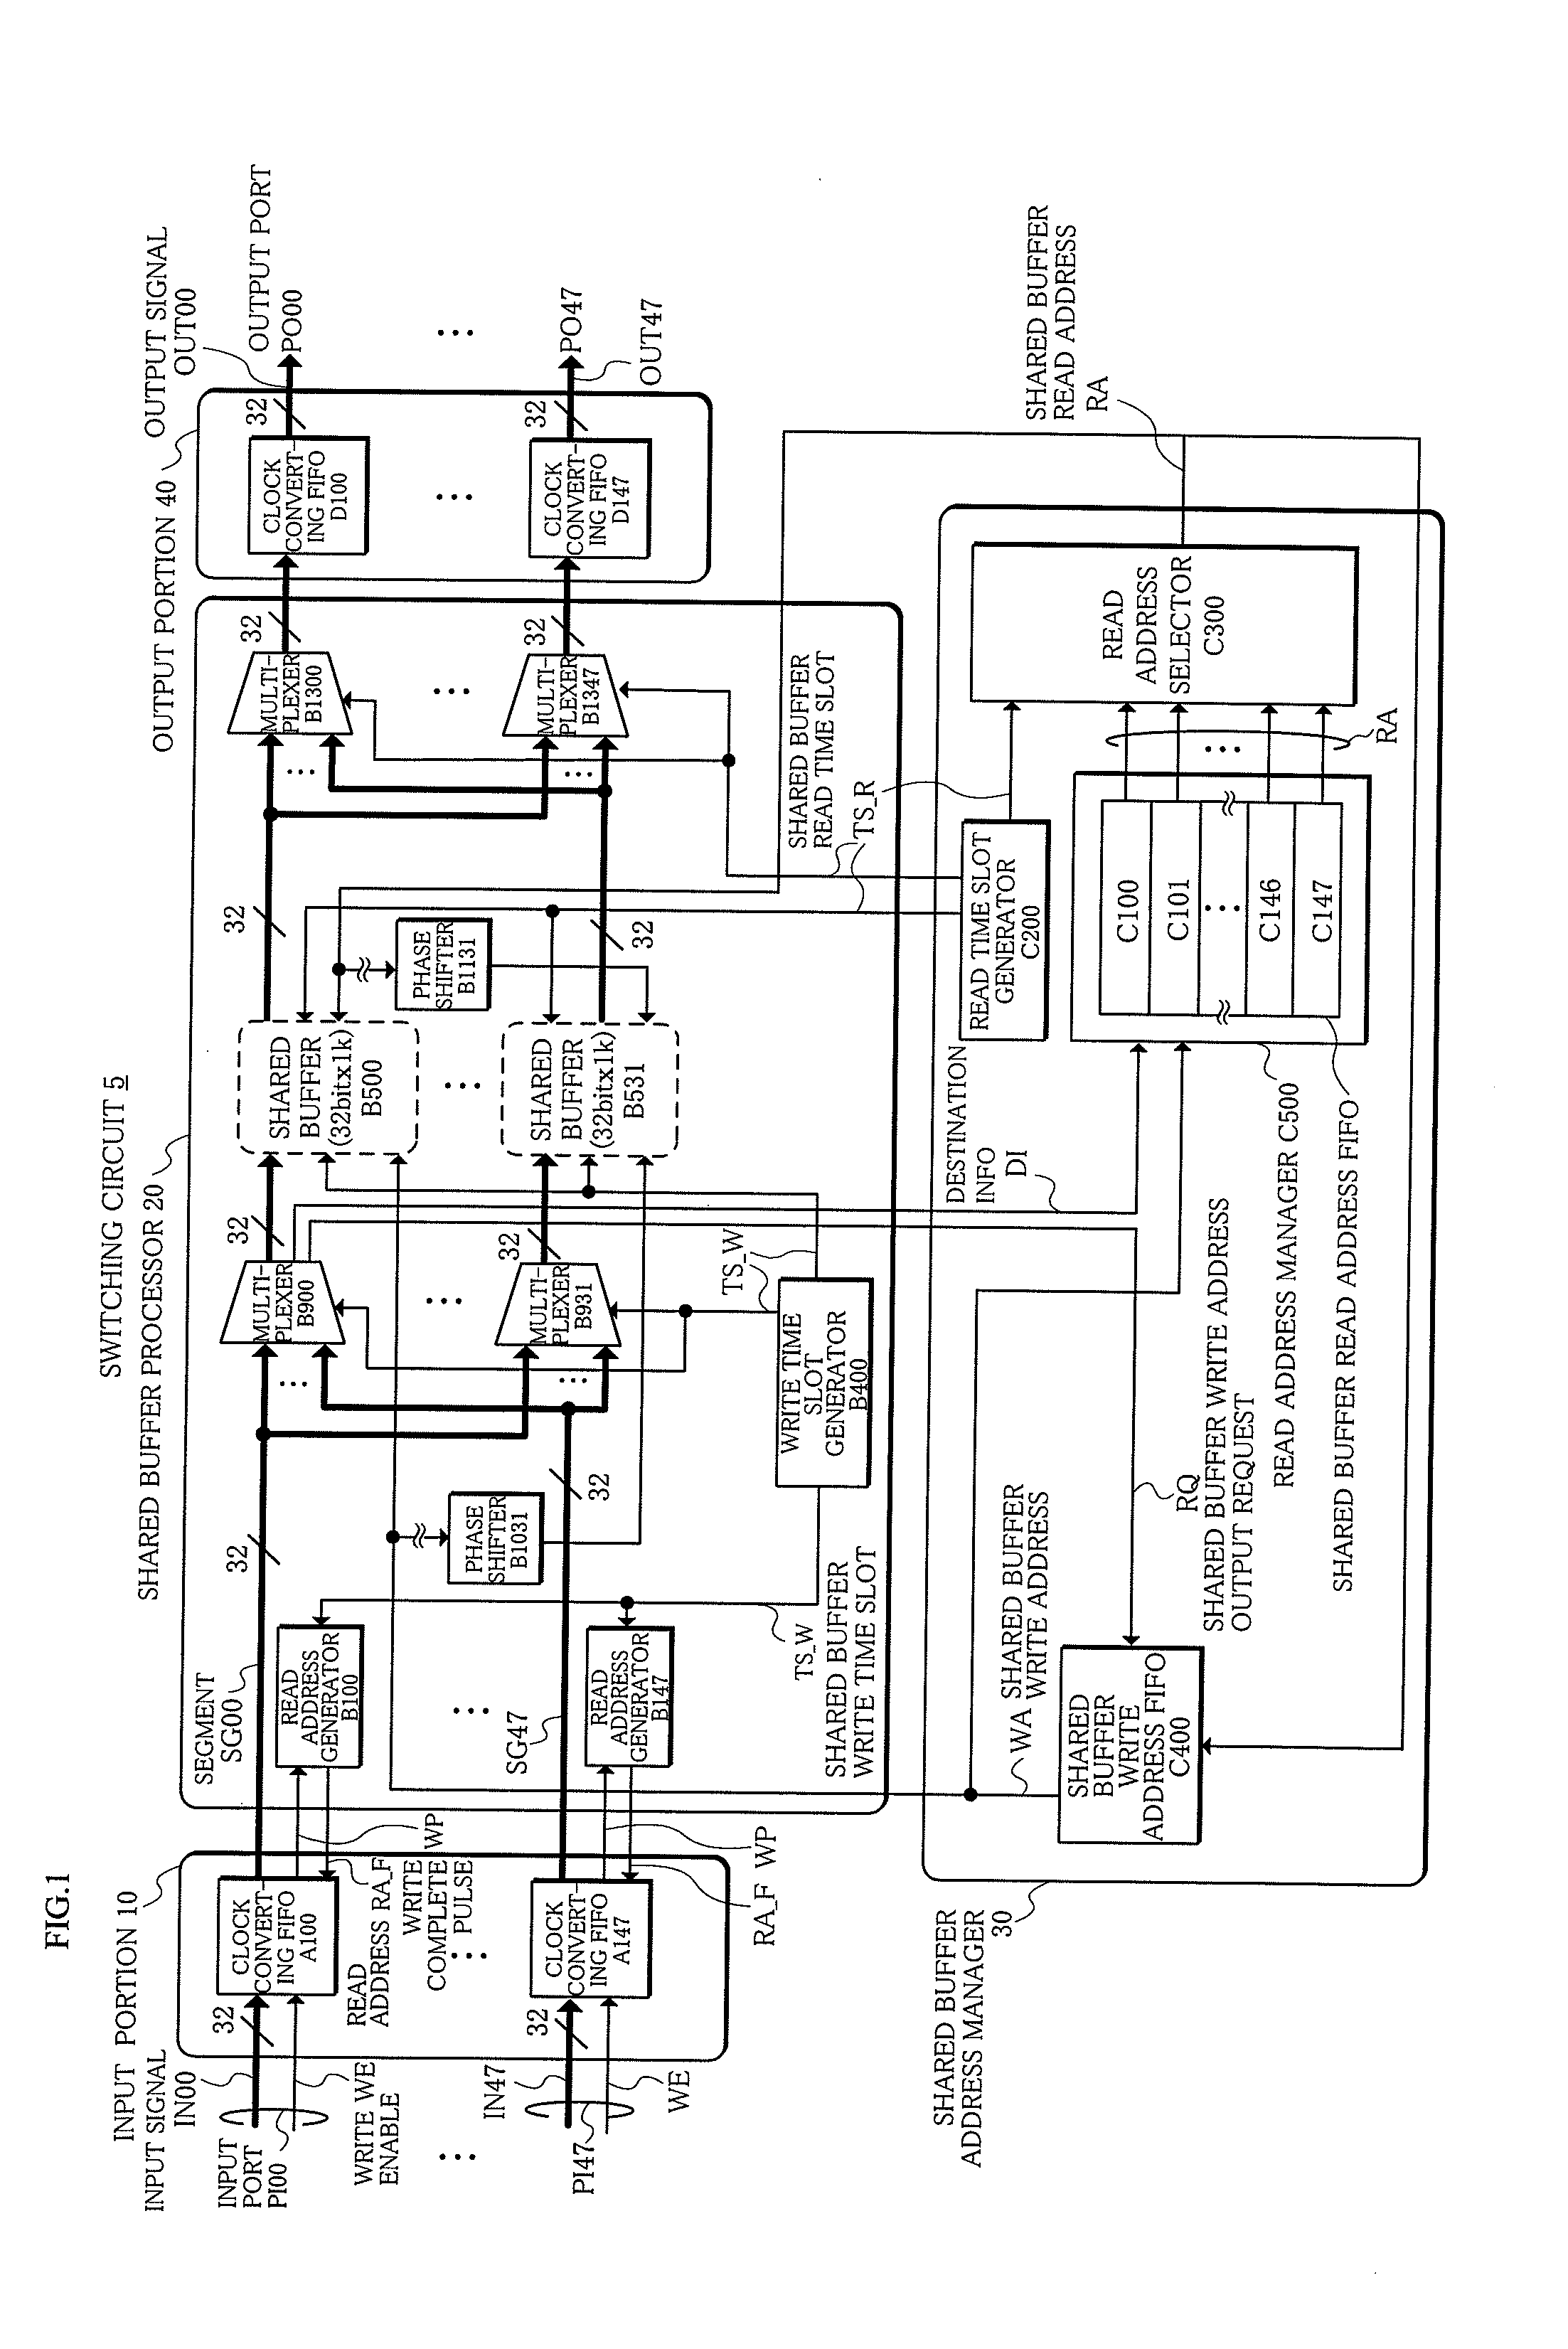 Data switching method and circuit